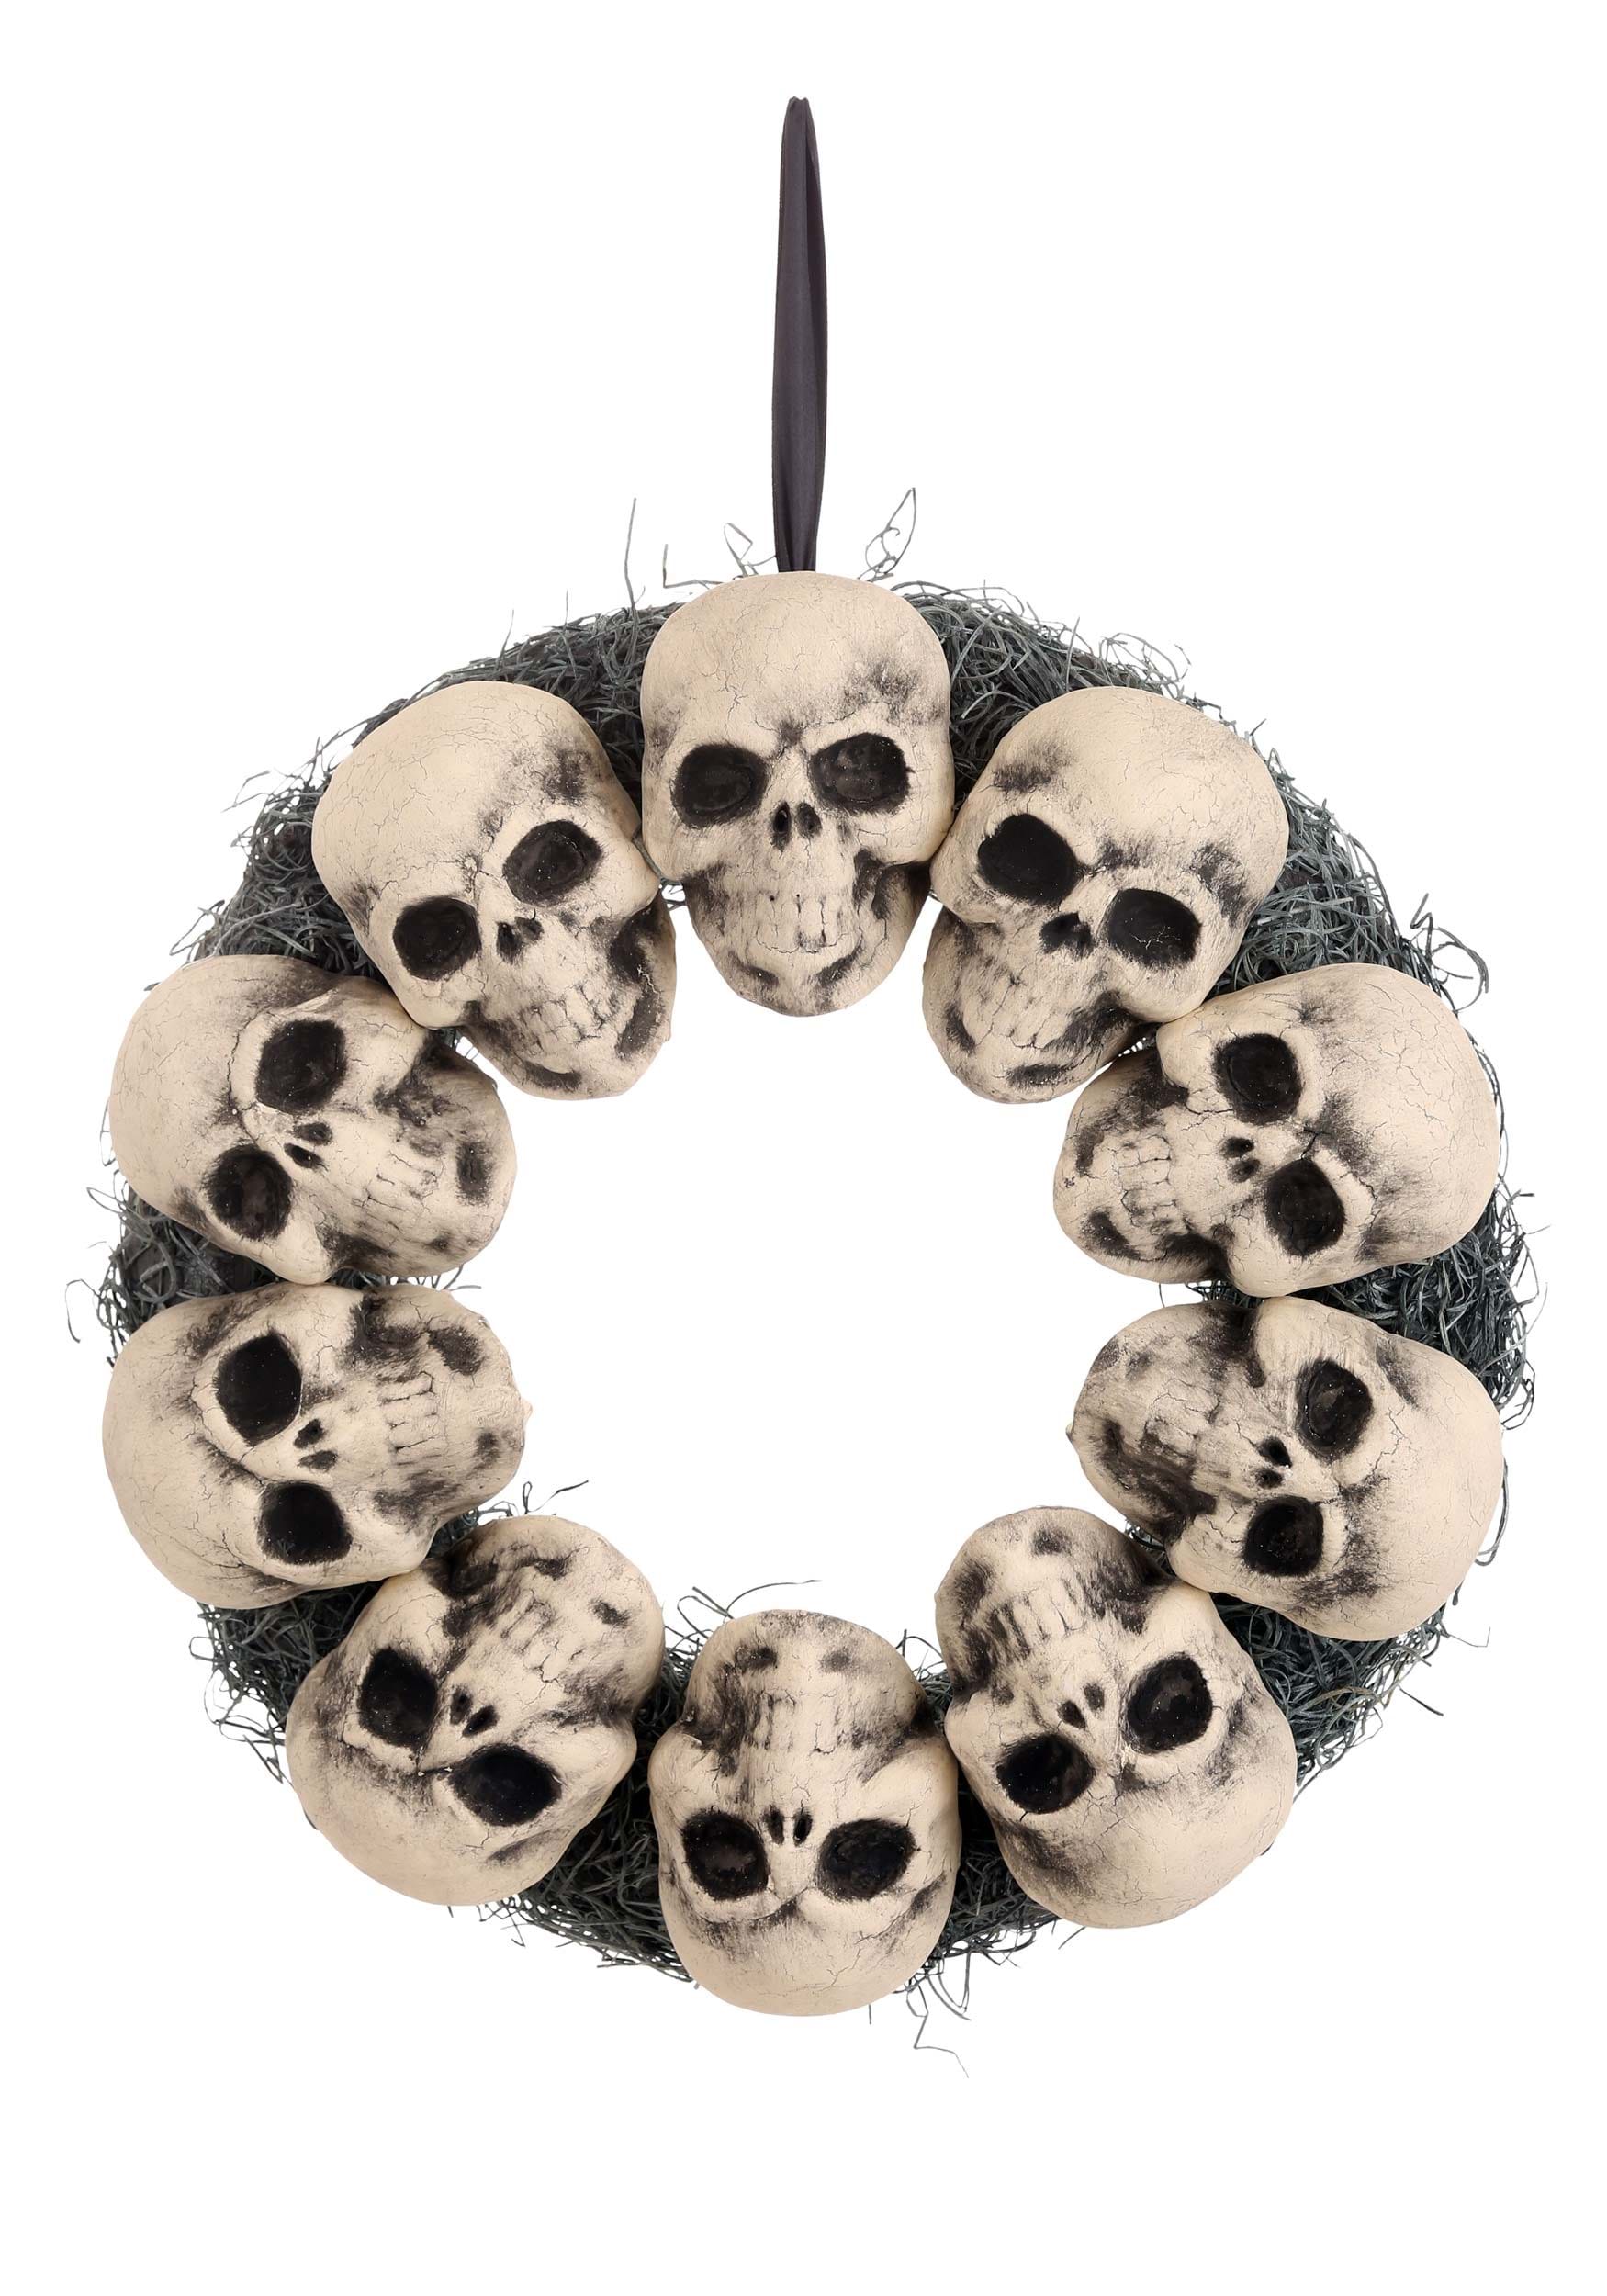 15-Inch Scary Skulls Wreath Halloween Decoration | Halloween Wreath